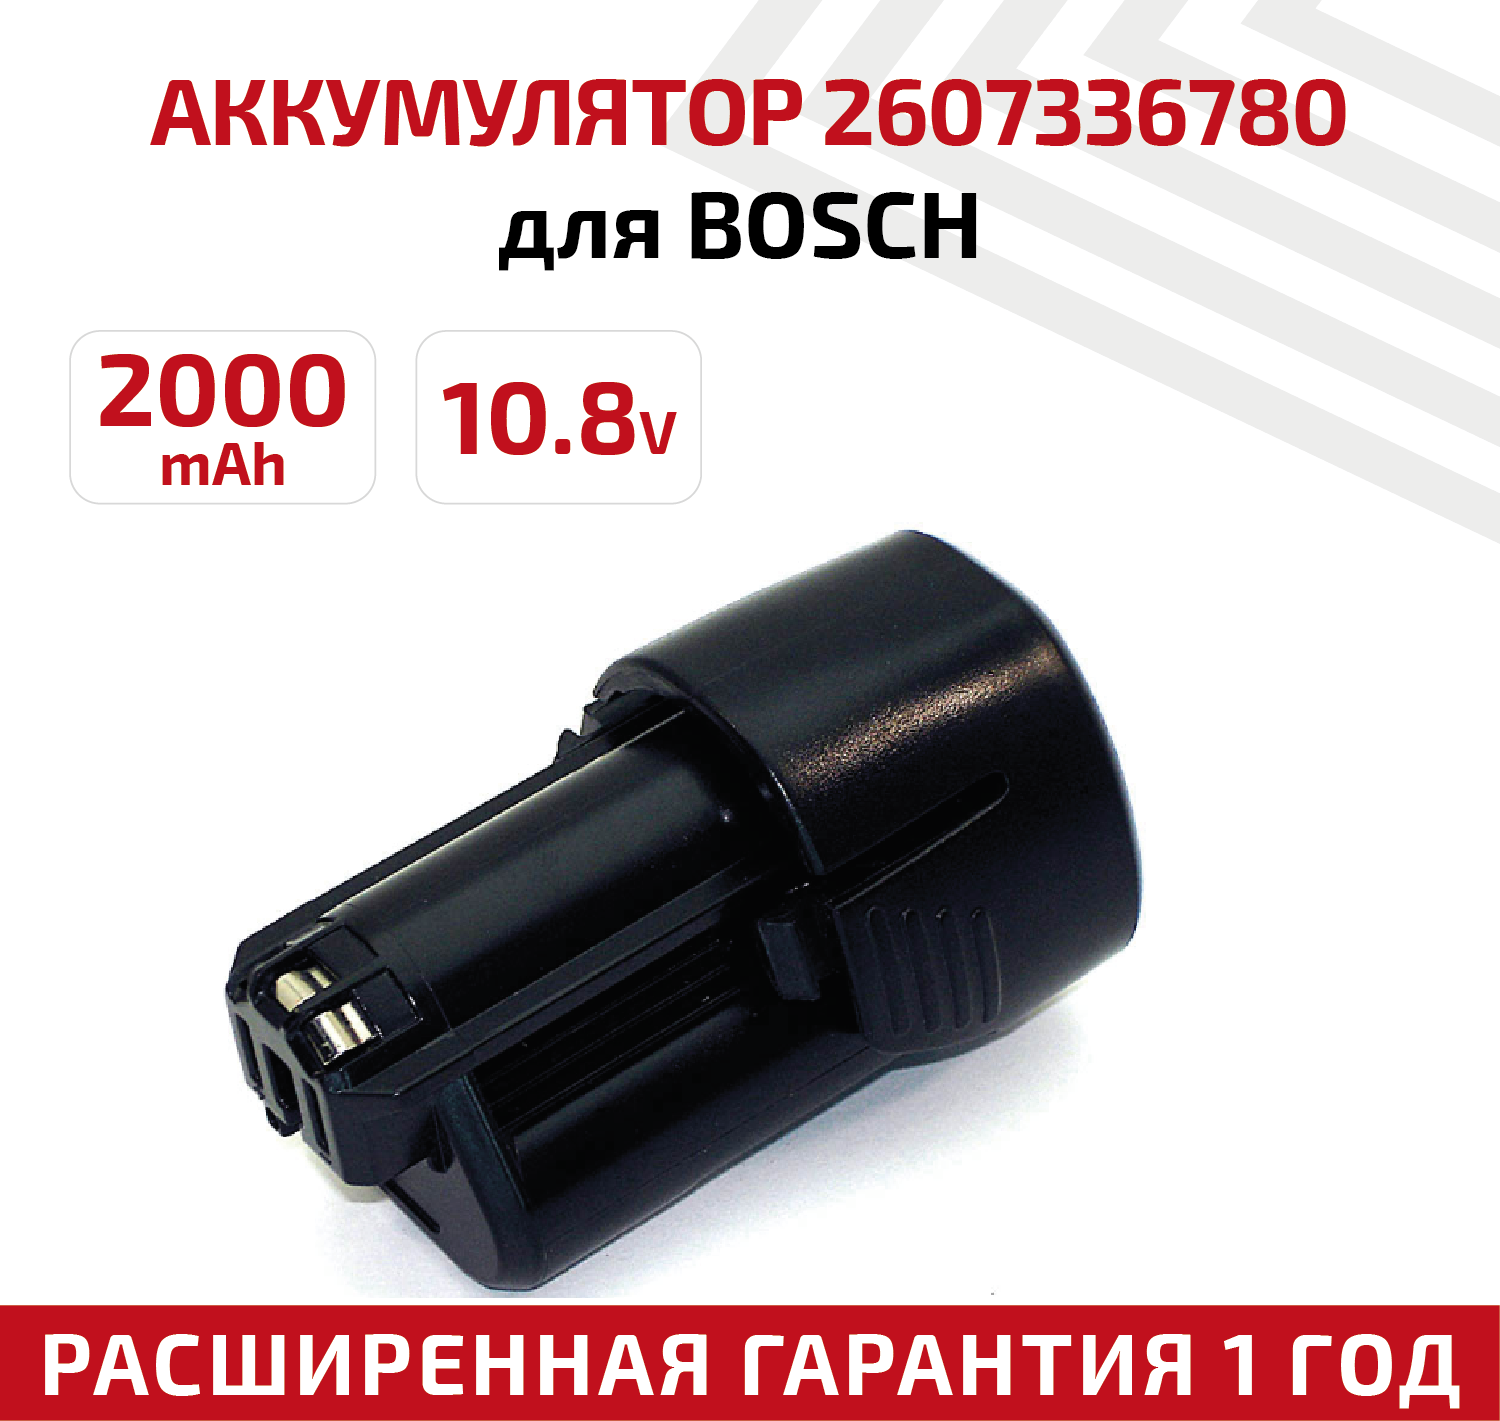 Аккумулятор RageX для электроинструмента Bosch (p/n: D-70745, 2607336013, 2607336014, BAT411, 7074B. V), 2Ач, 10.8В, Li-Ion